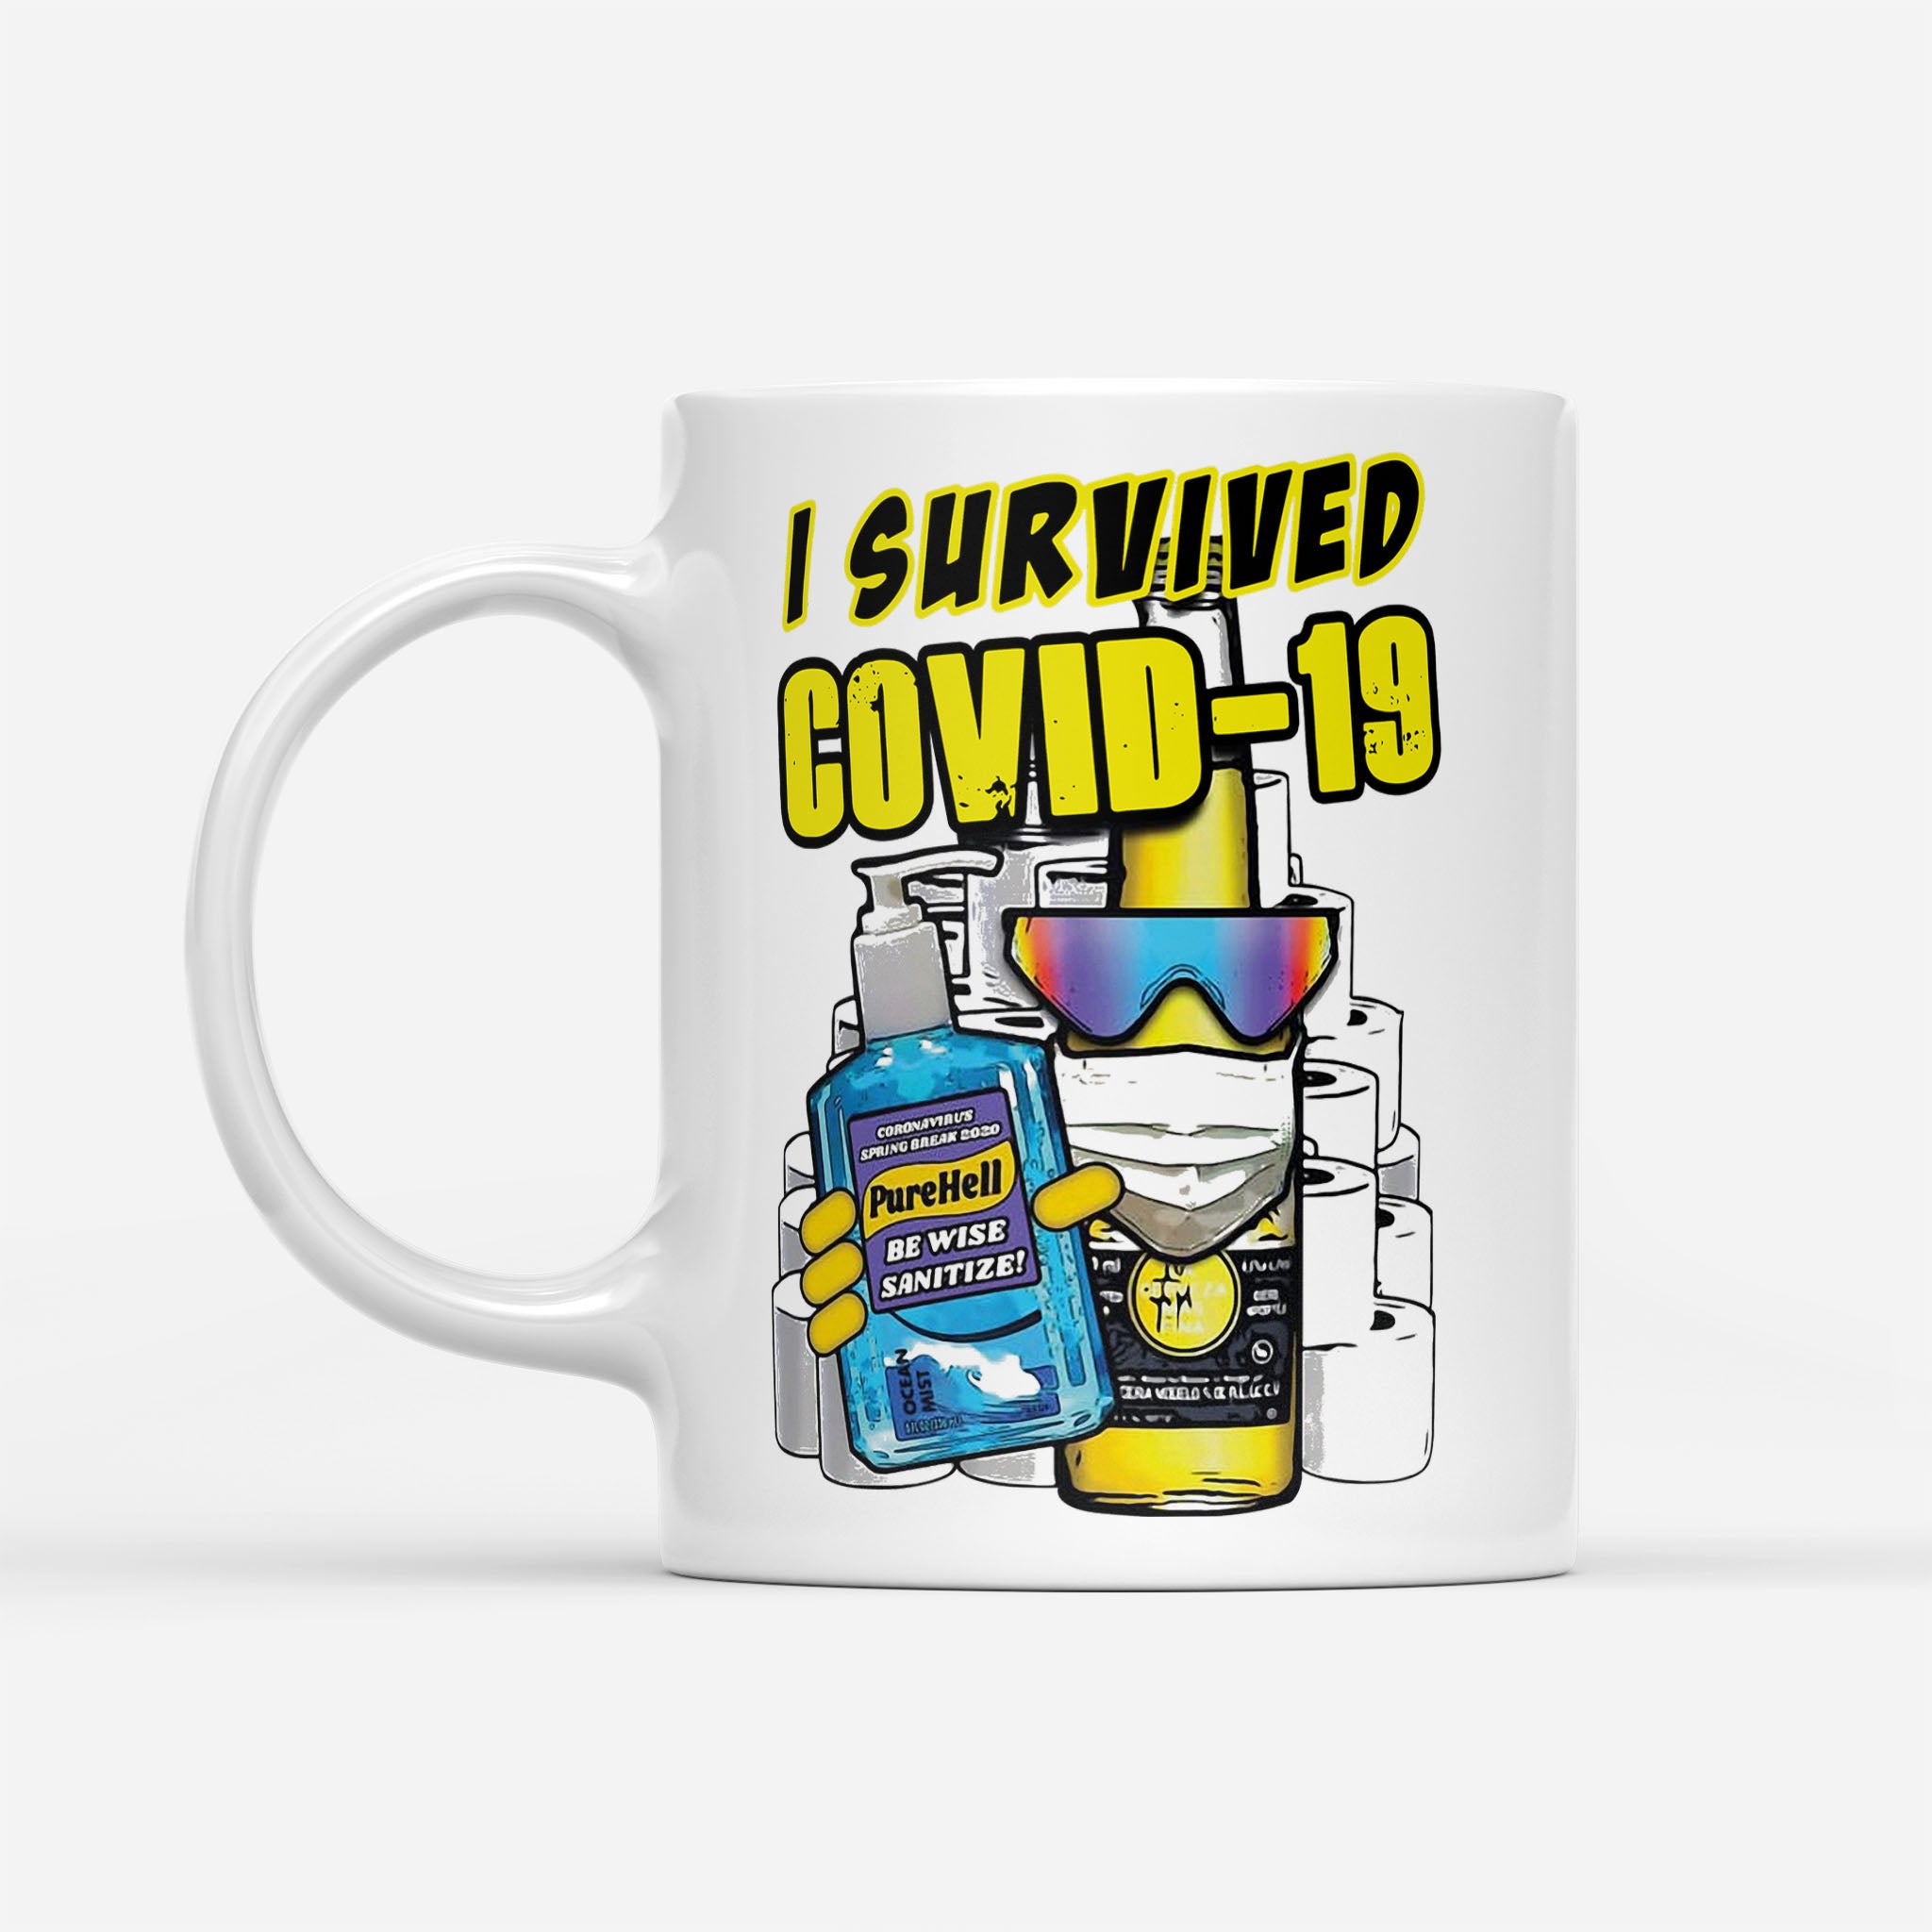 I Survived Covid-19 Pure Hell - White Mug